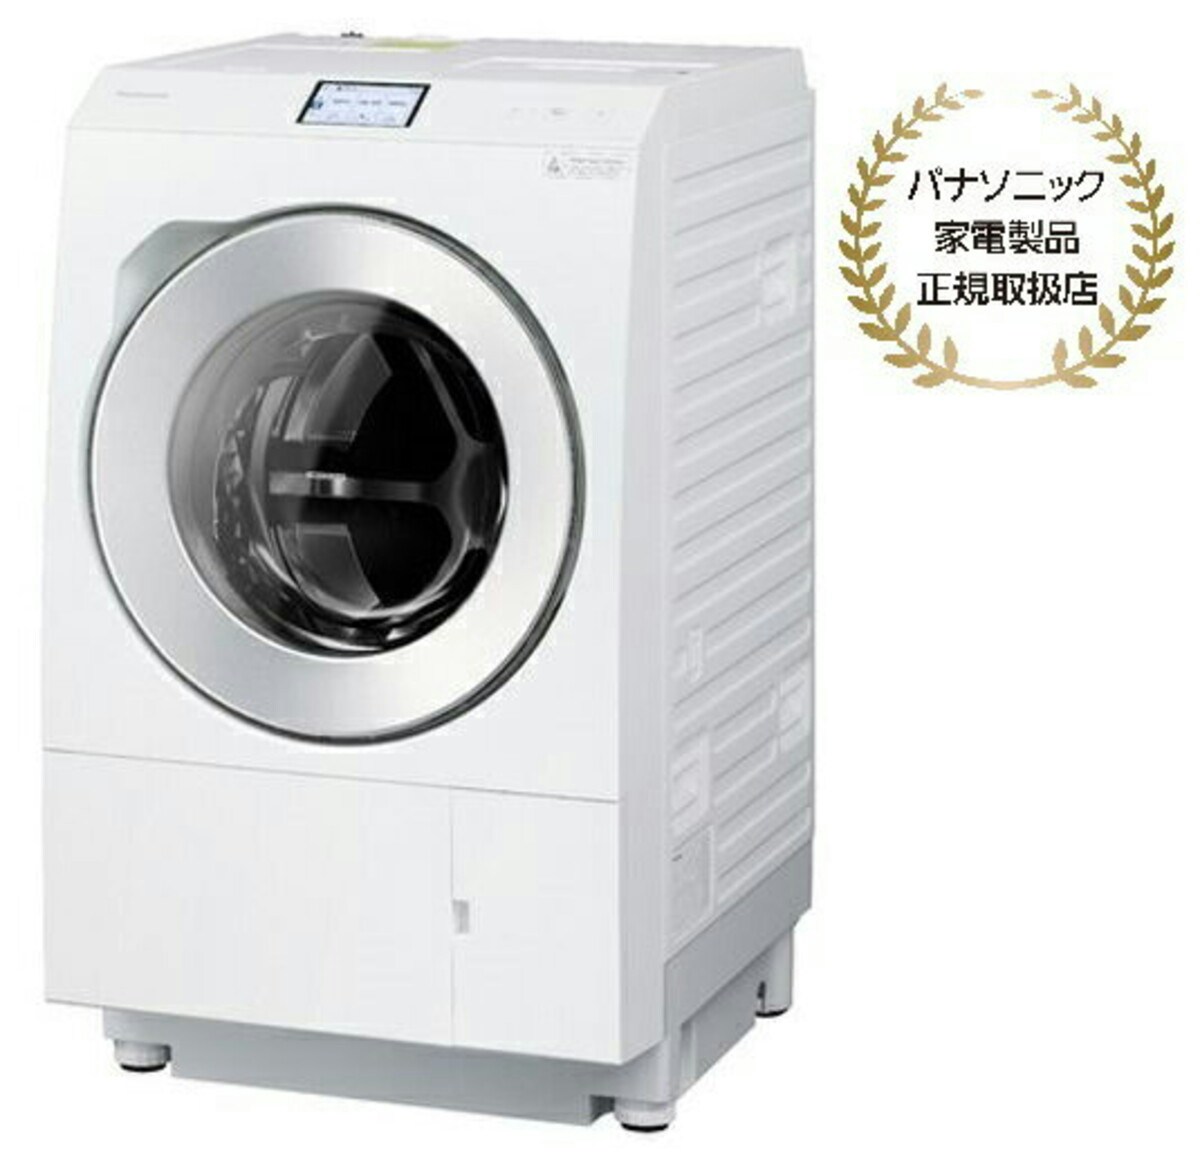 Panasonic ななめドラム洗濯乾燥機 NA-LX129BR